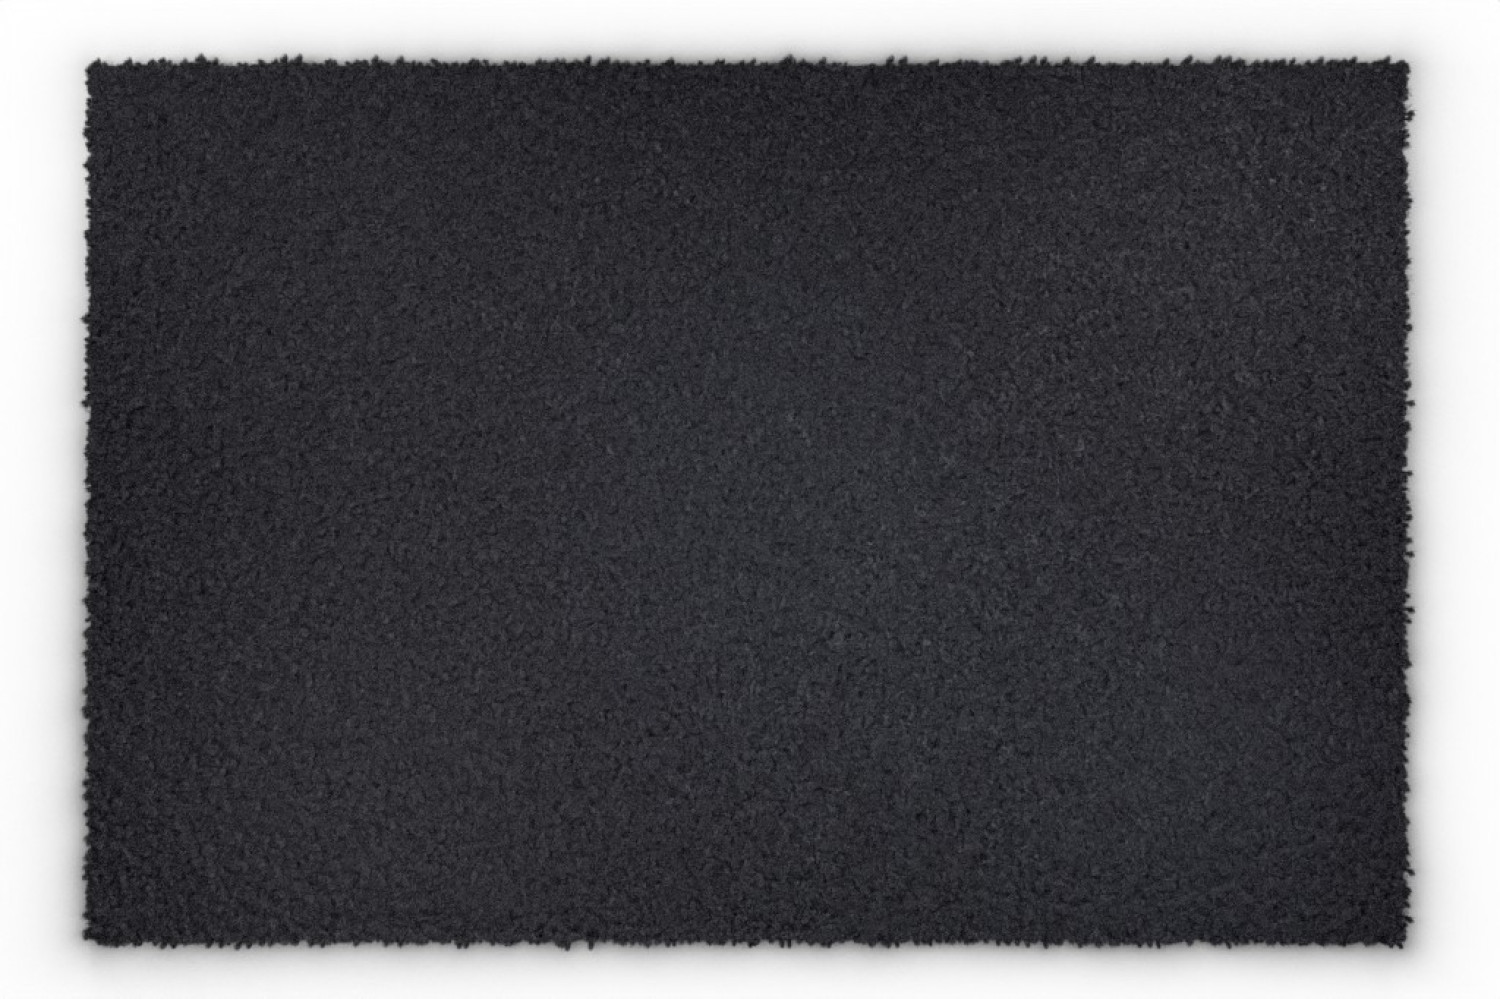 ENTRADA Kokosmatte schwarz 007 100 cm